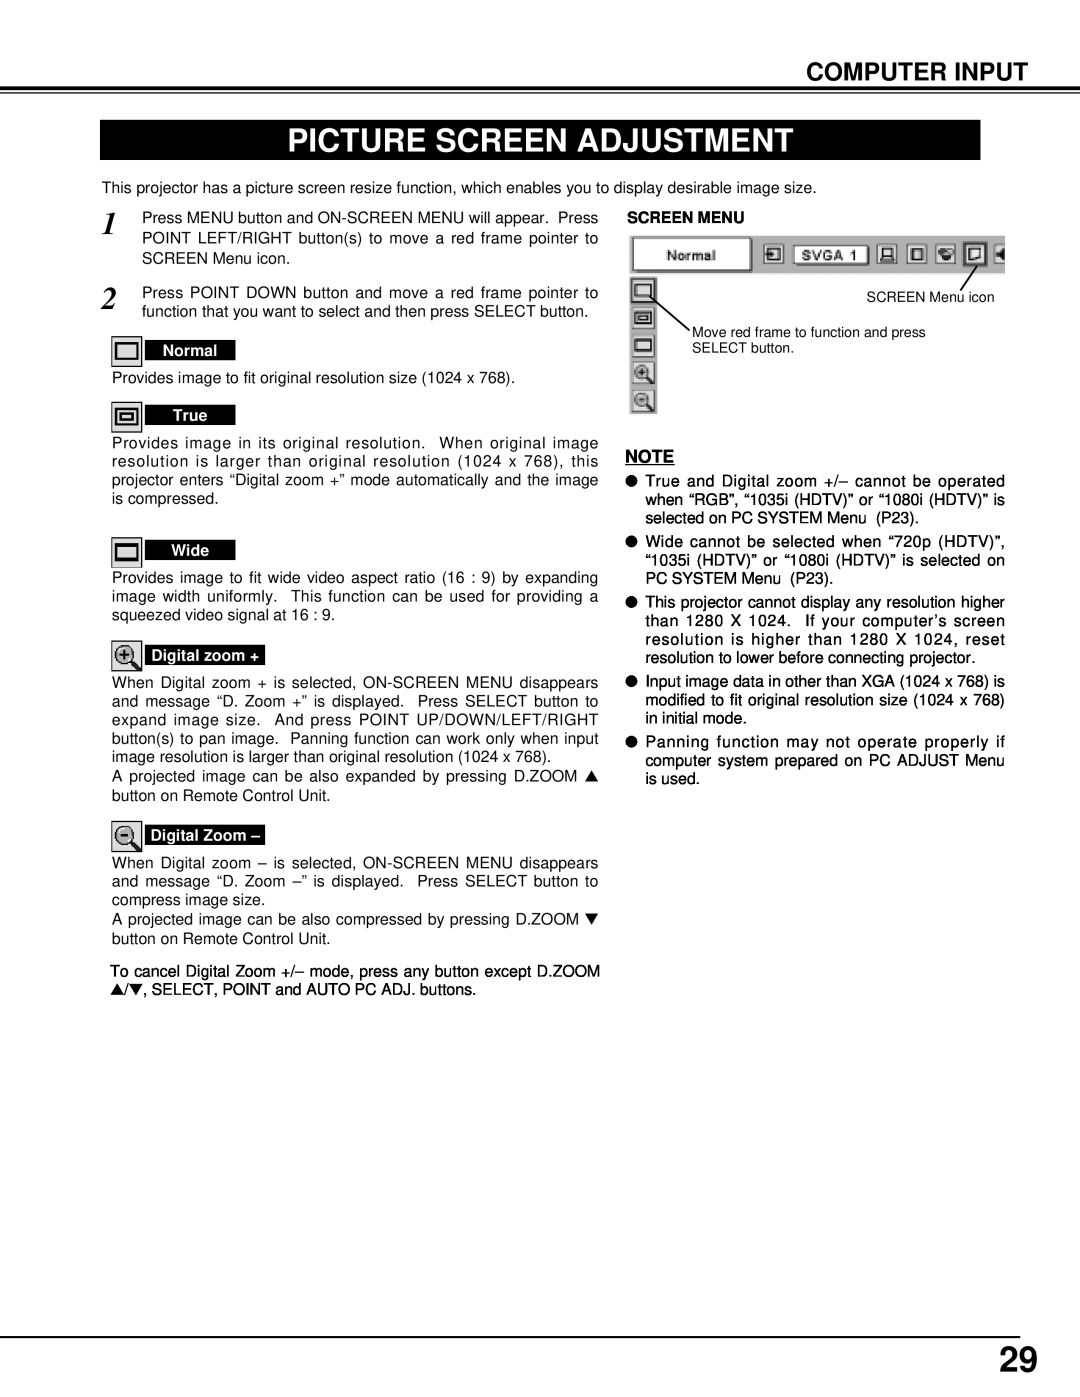 Eiki LC-X986 instruction manual Picture Screen Adjustment, Screen Menu 